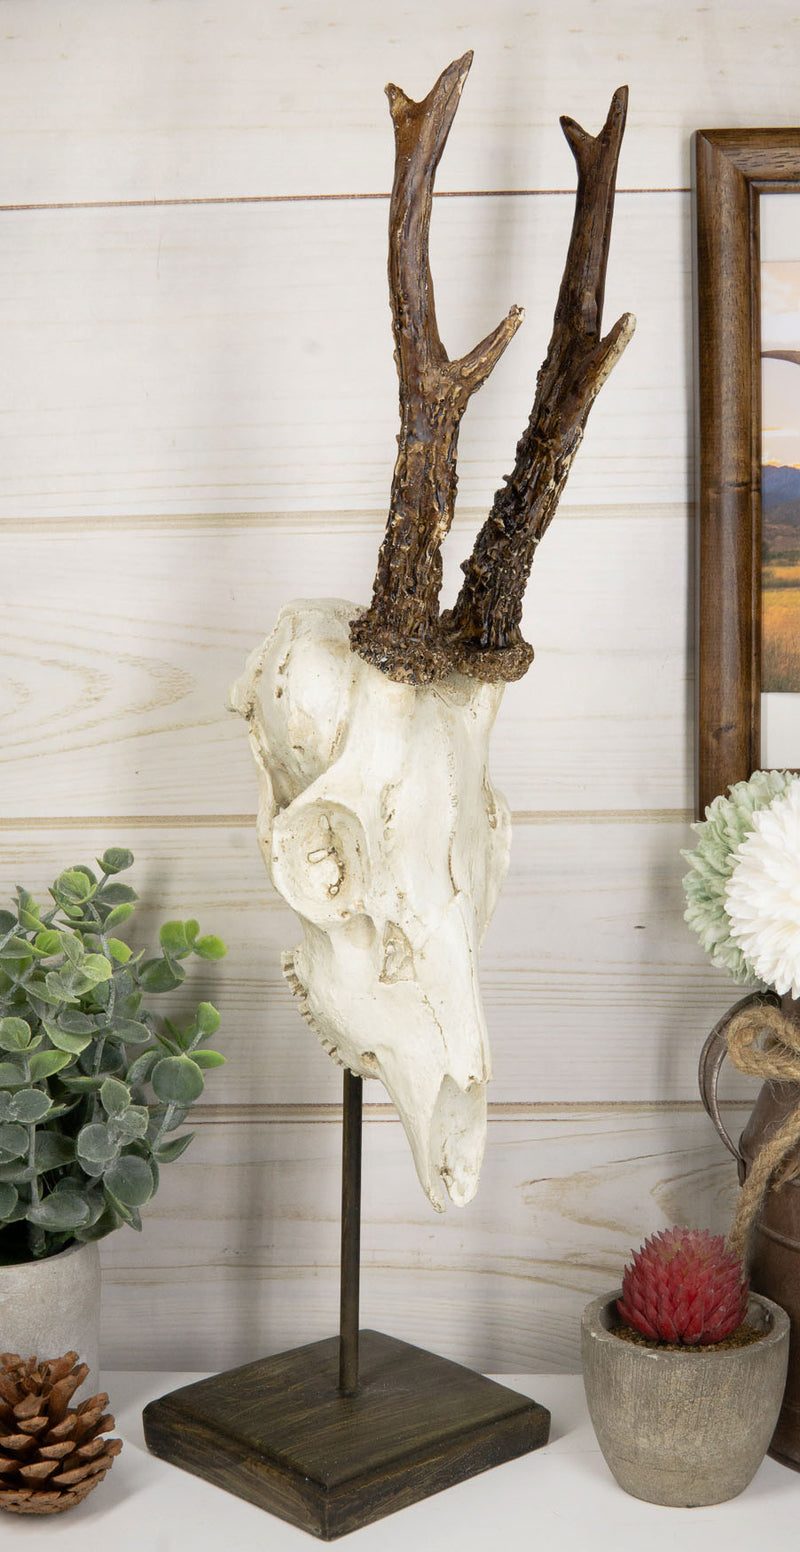 Large 15"H Rustic Roe Deer Buck Head Skull On Museum Pole Stand Base Figurine